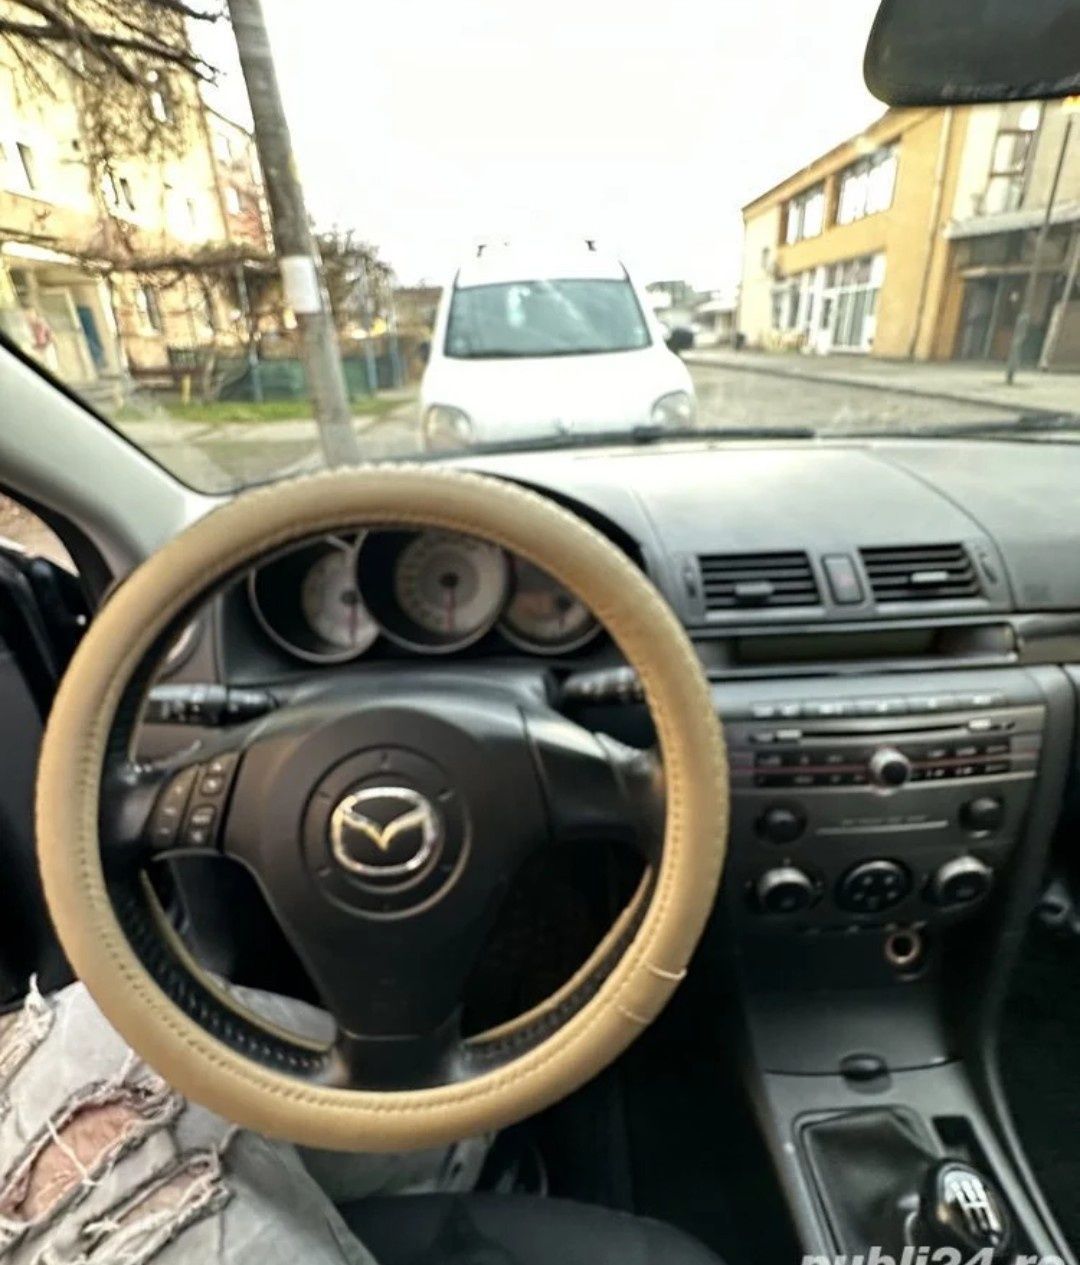 Vând, autoturism Mazda 3,an 2006, 1.6, motorina